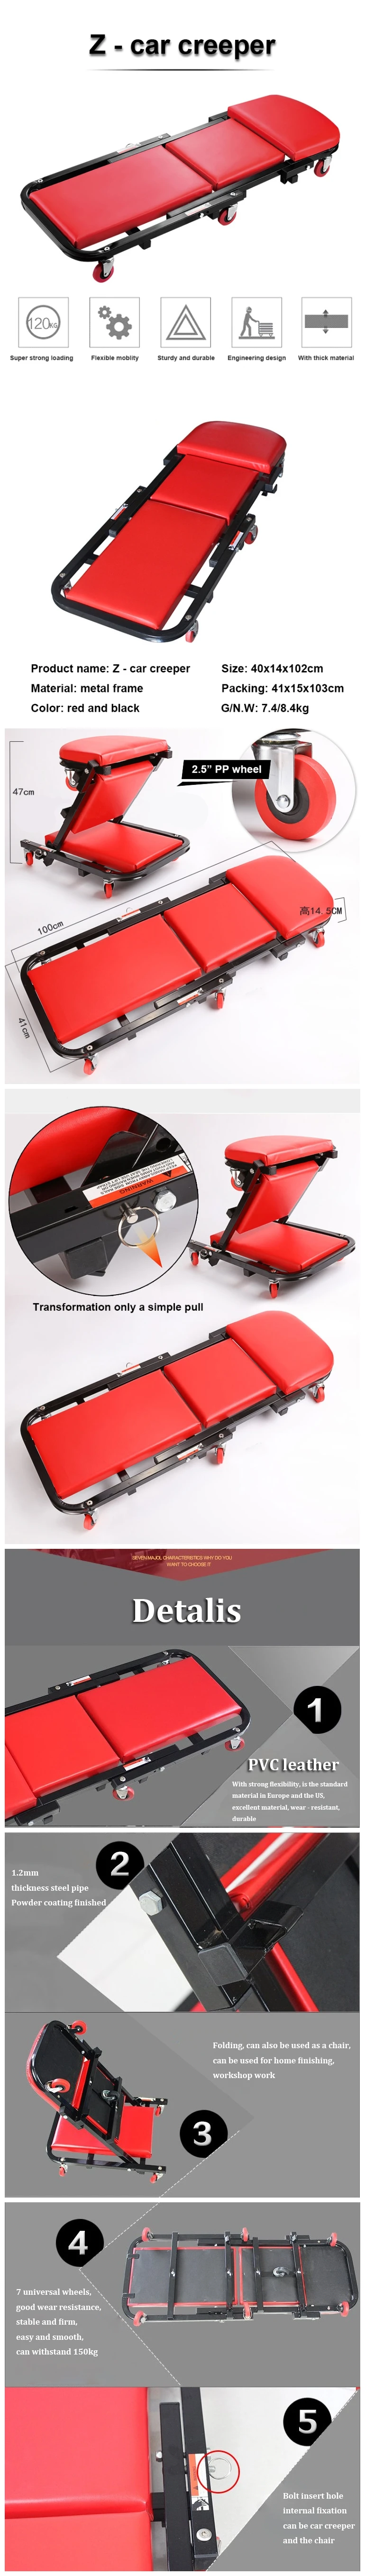 40" Z Shape Mechanic Creeper Seat Rolling Chair Workshop Stool Garage Shop Cart Tray Repair